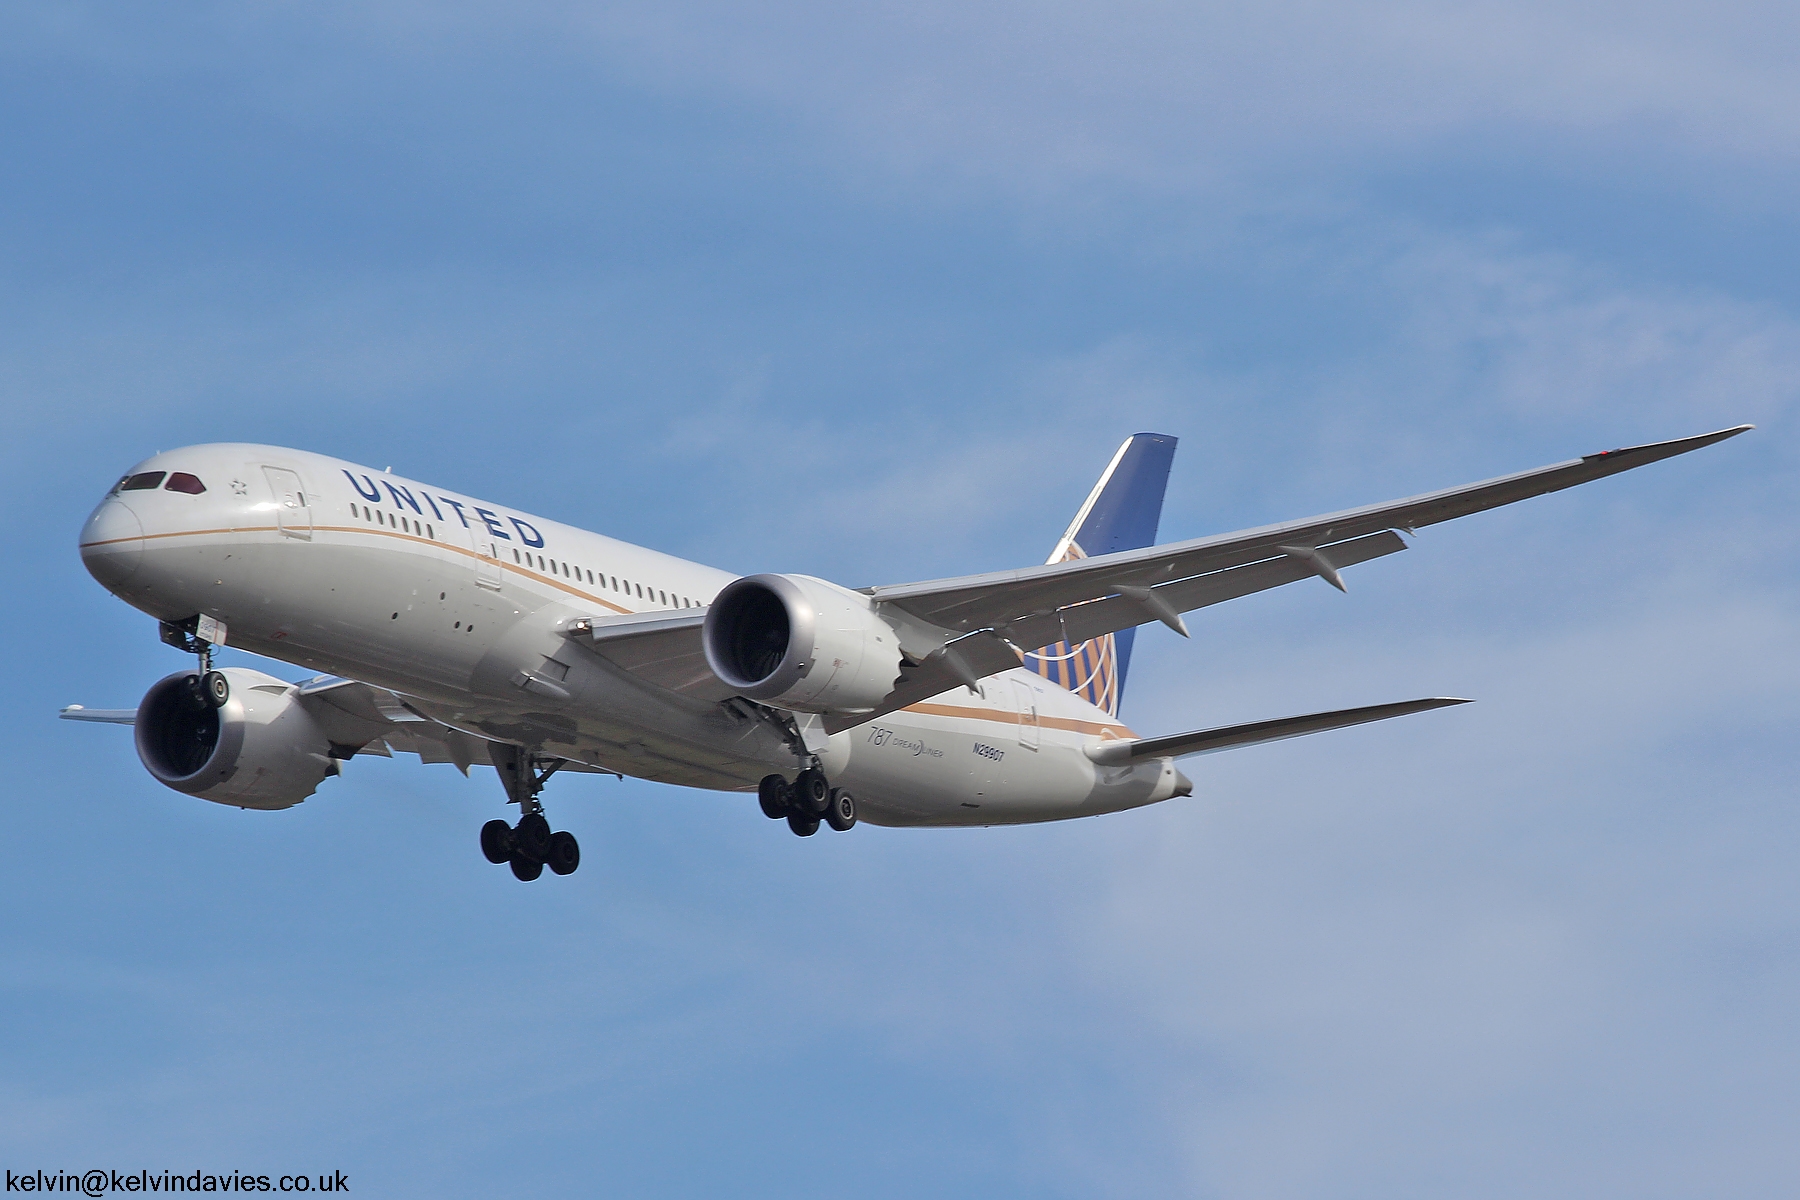 United Airlines 787 N29907